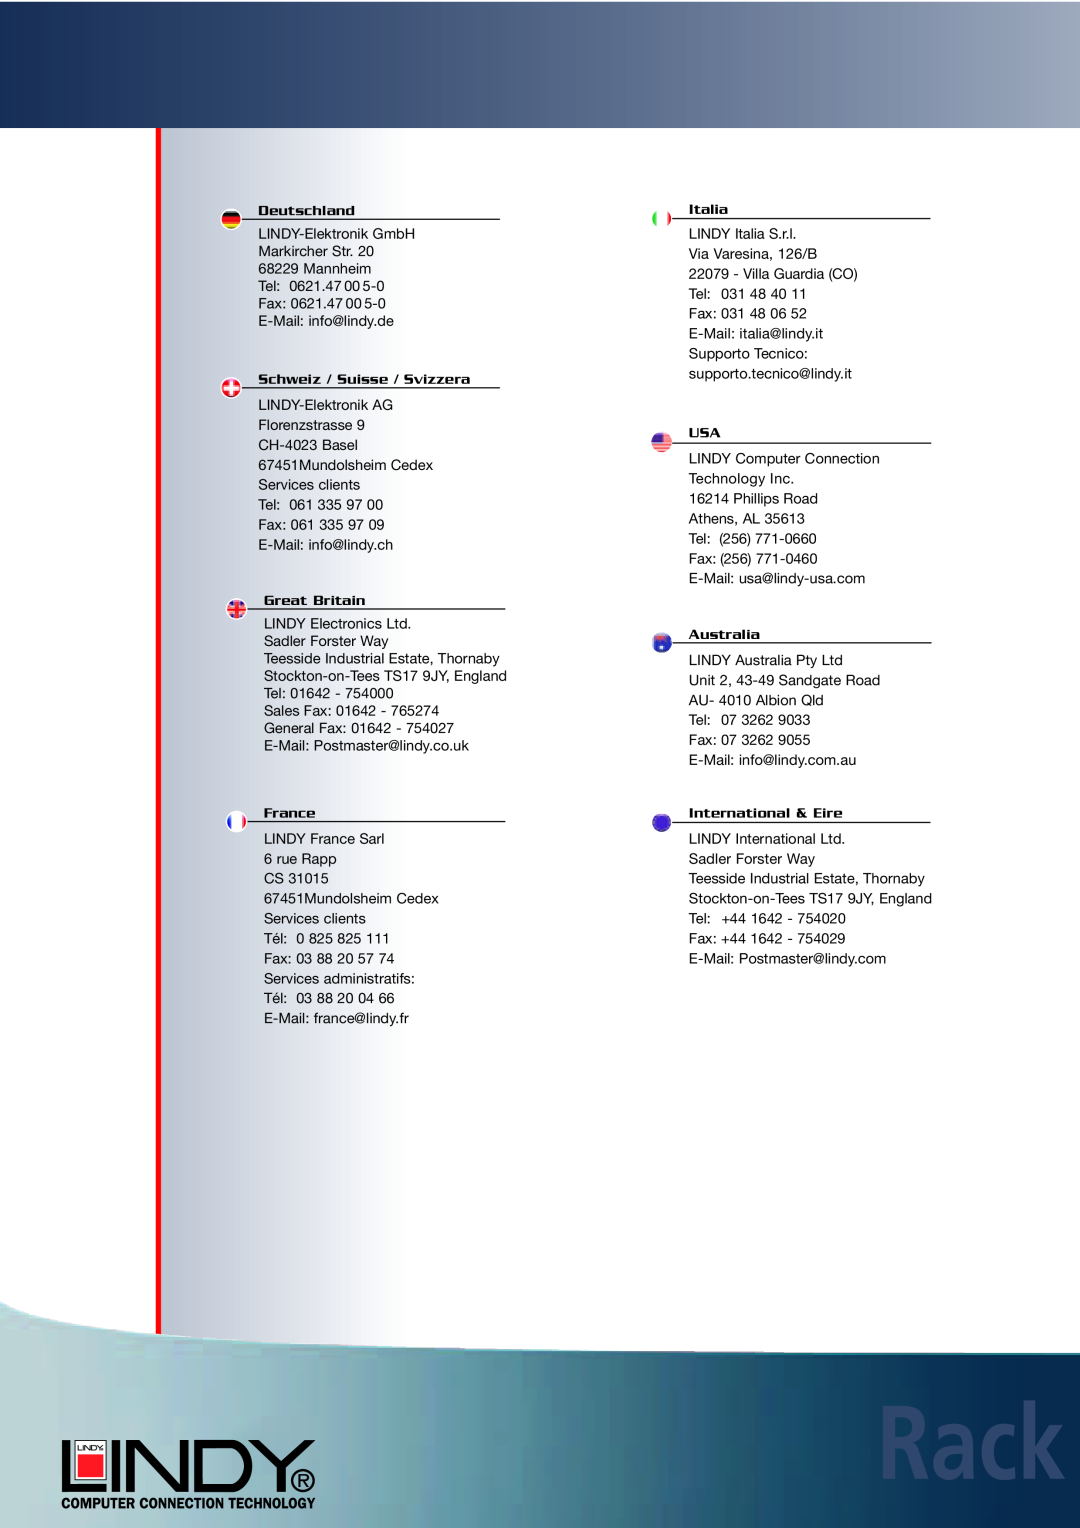 Lindy Carbon Monoxide Alarm Rack, Deutschland, Schweiz / Suisse / Svizzera, Great Britain, France, Italia, Australia 